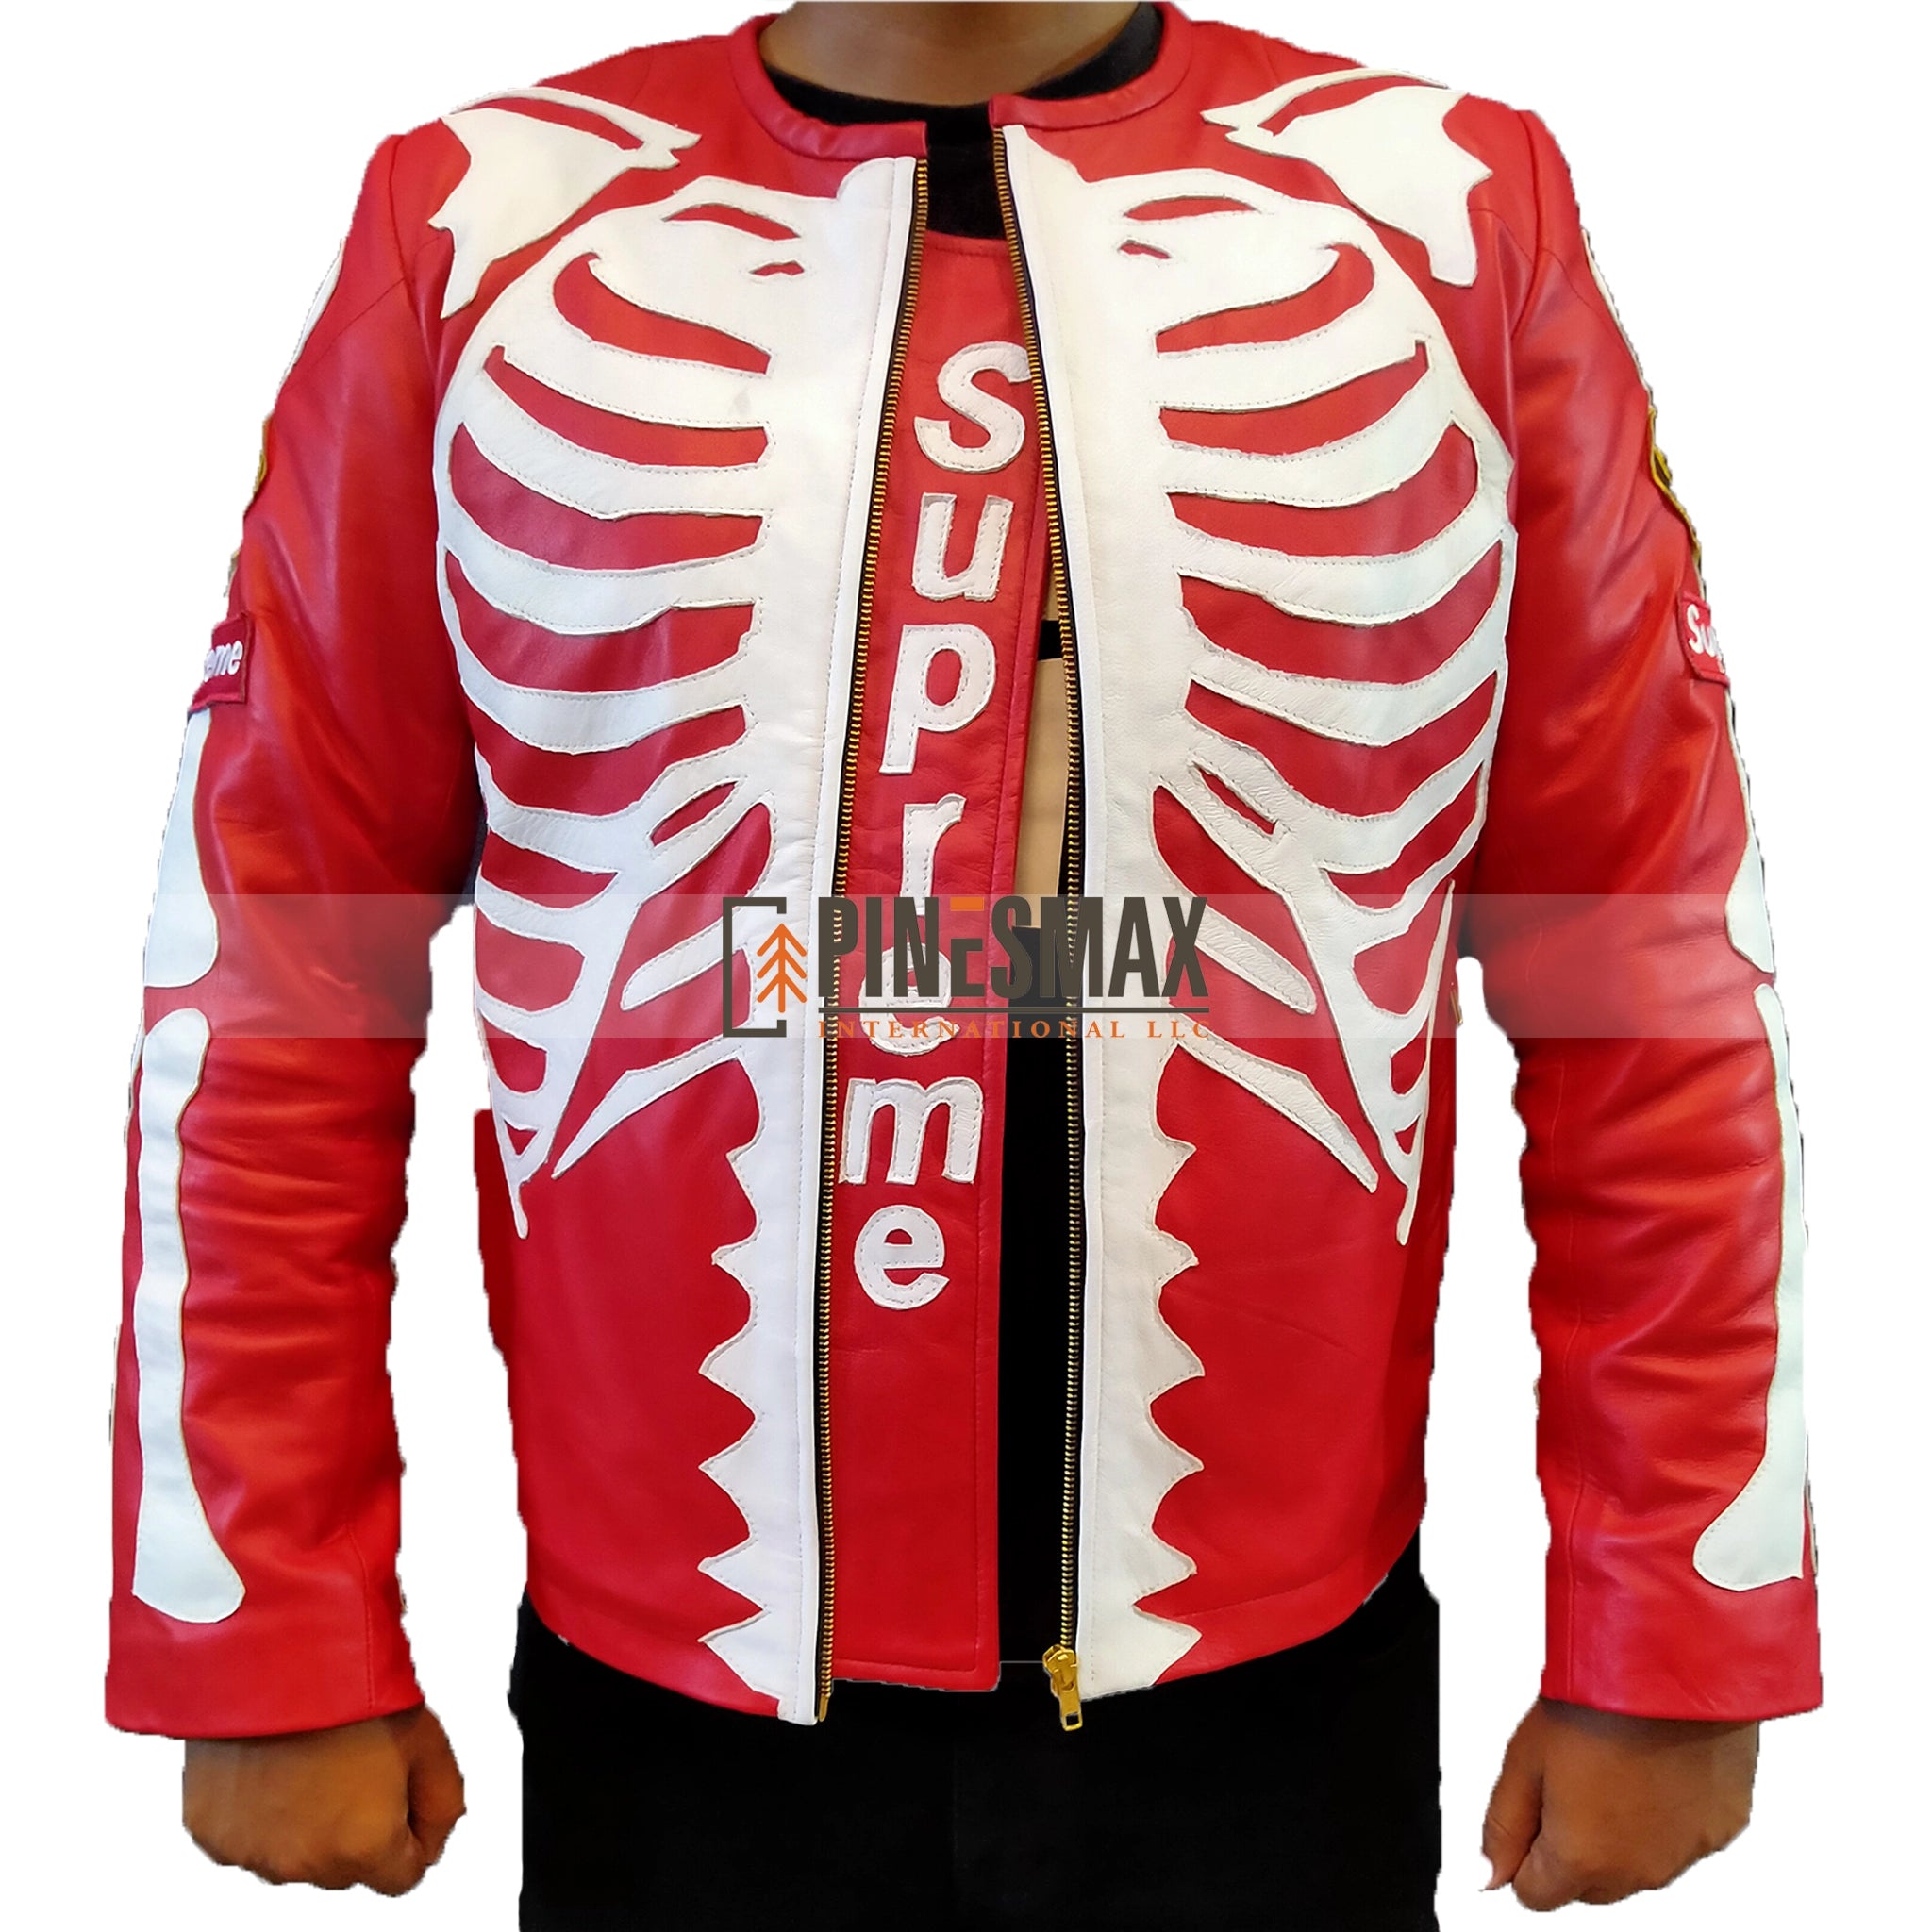 Red Skeleton Vanson Leather Jacket For Men - PINESMAX